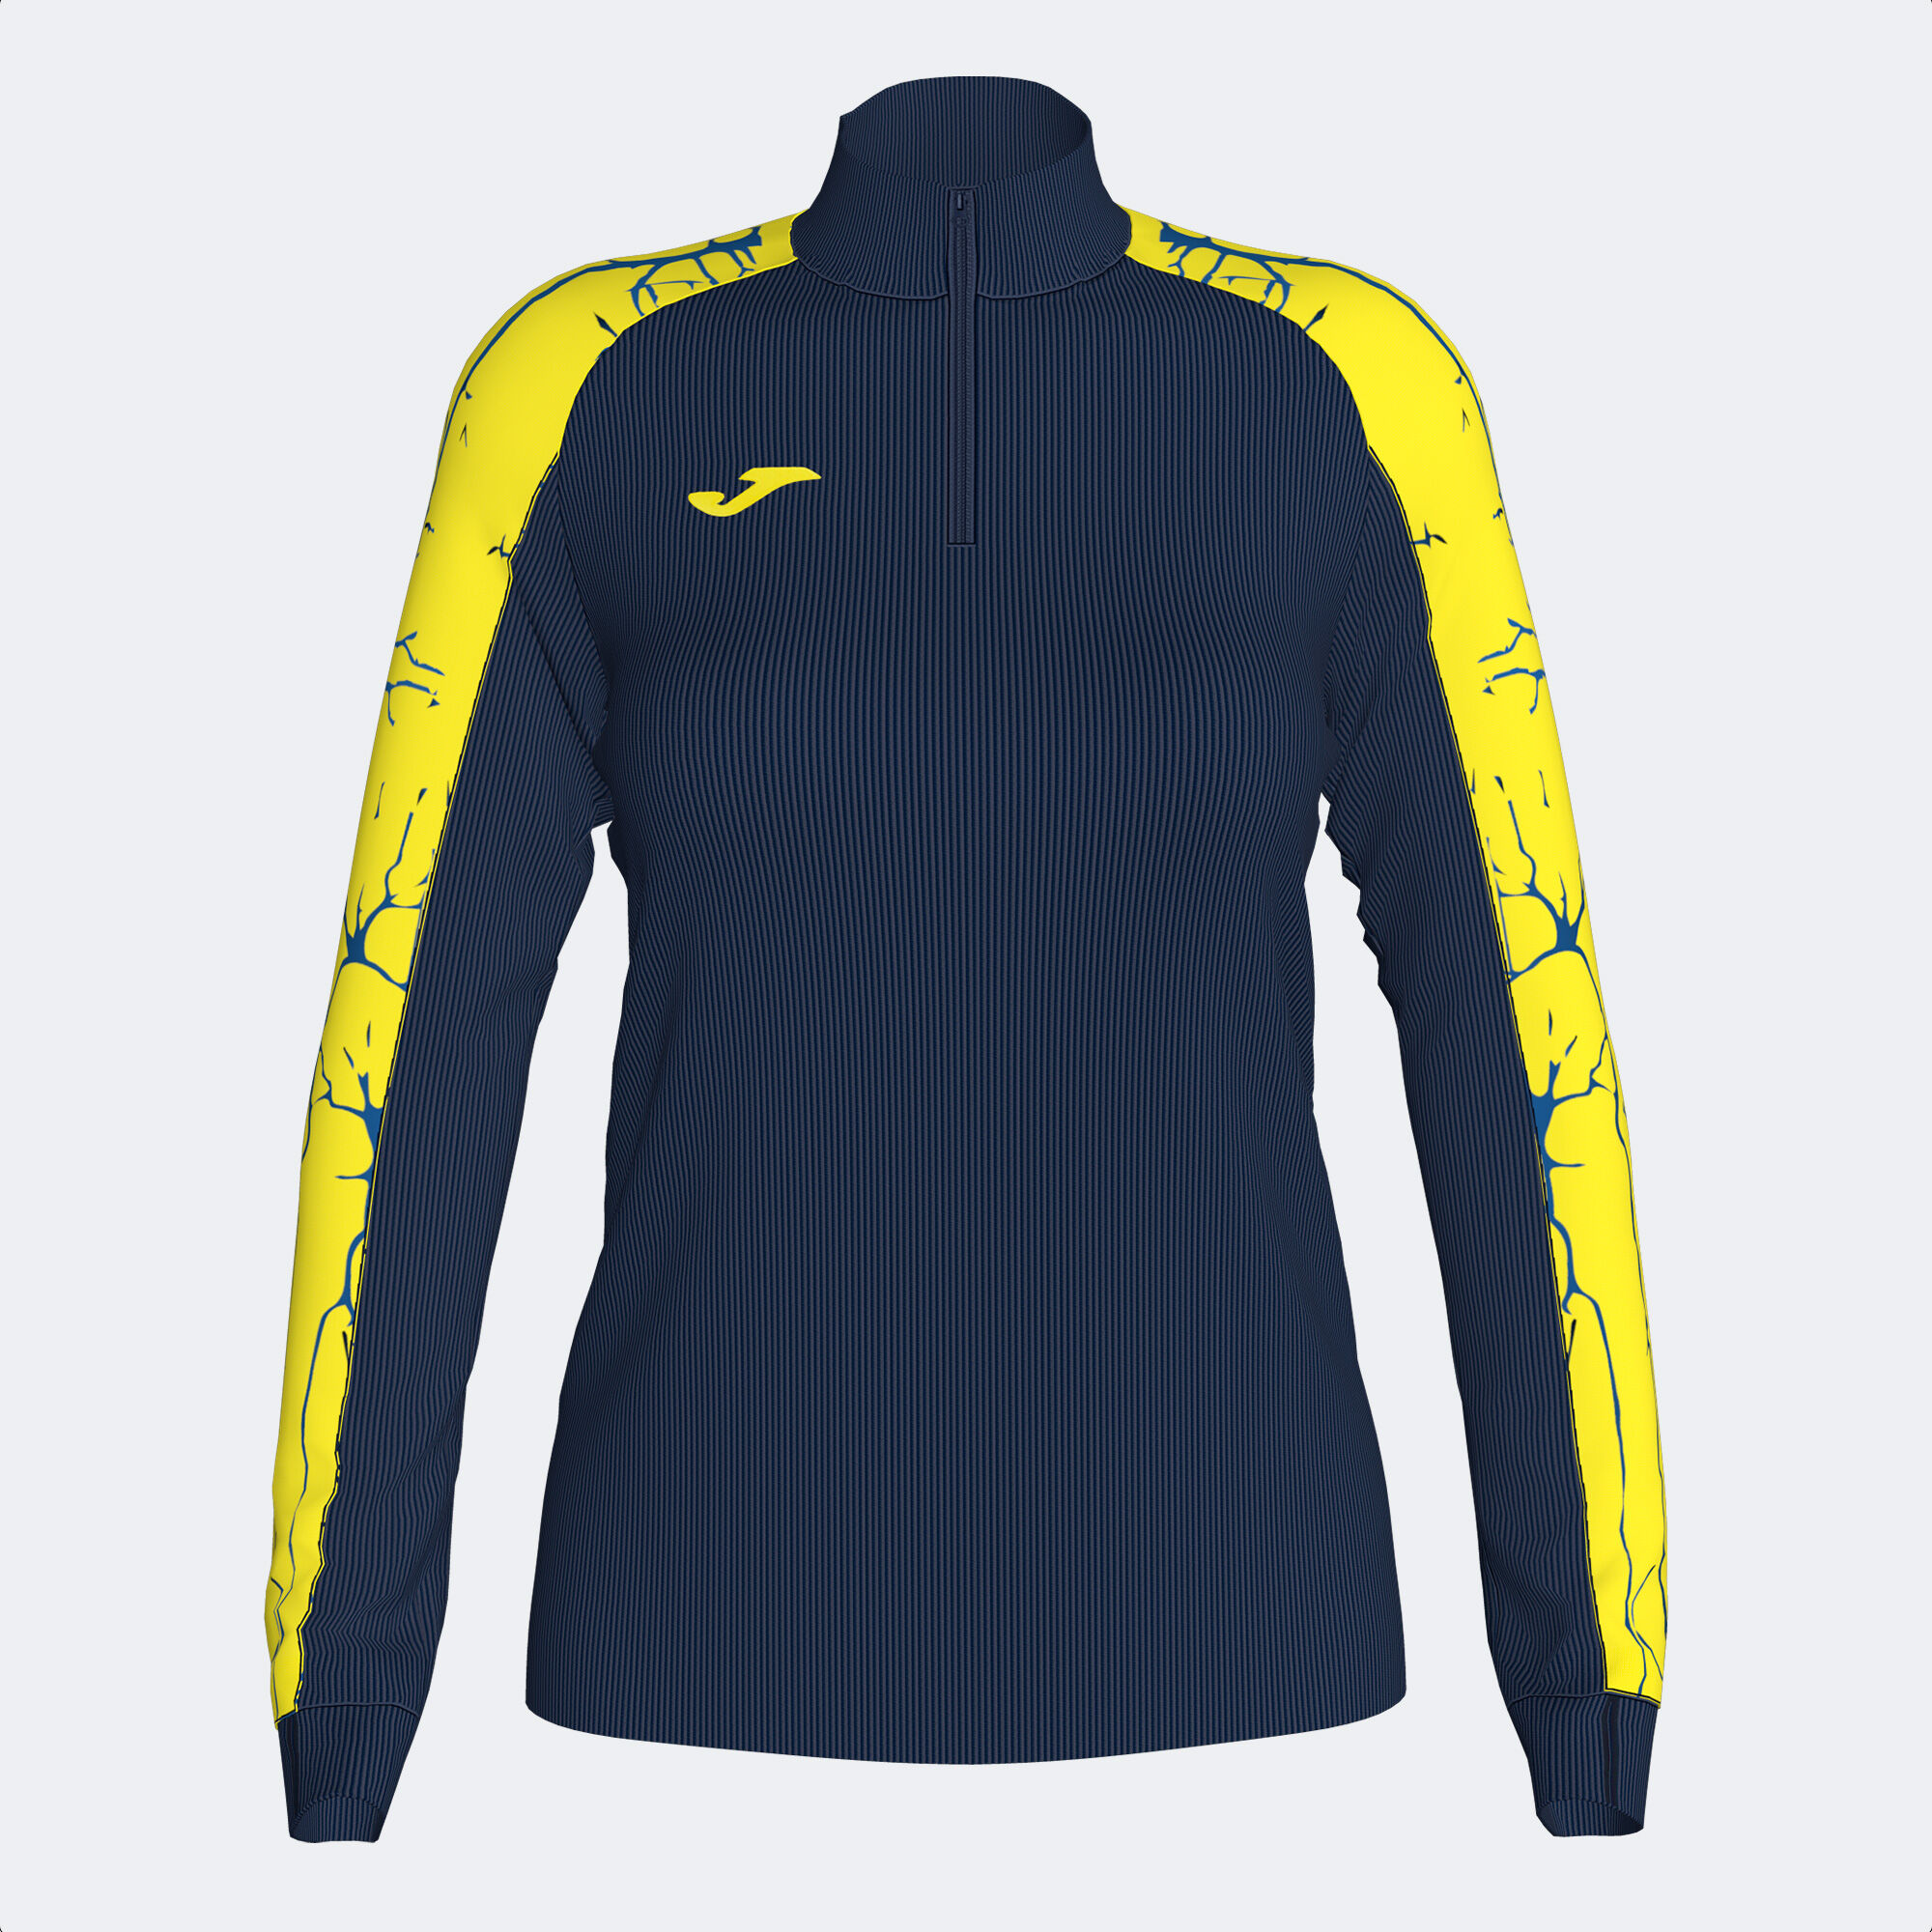 Sweatshirt woman Elite IX navy blue fluorescent yellow